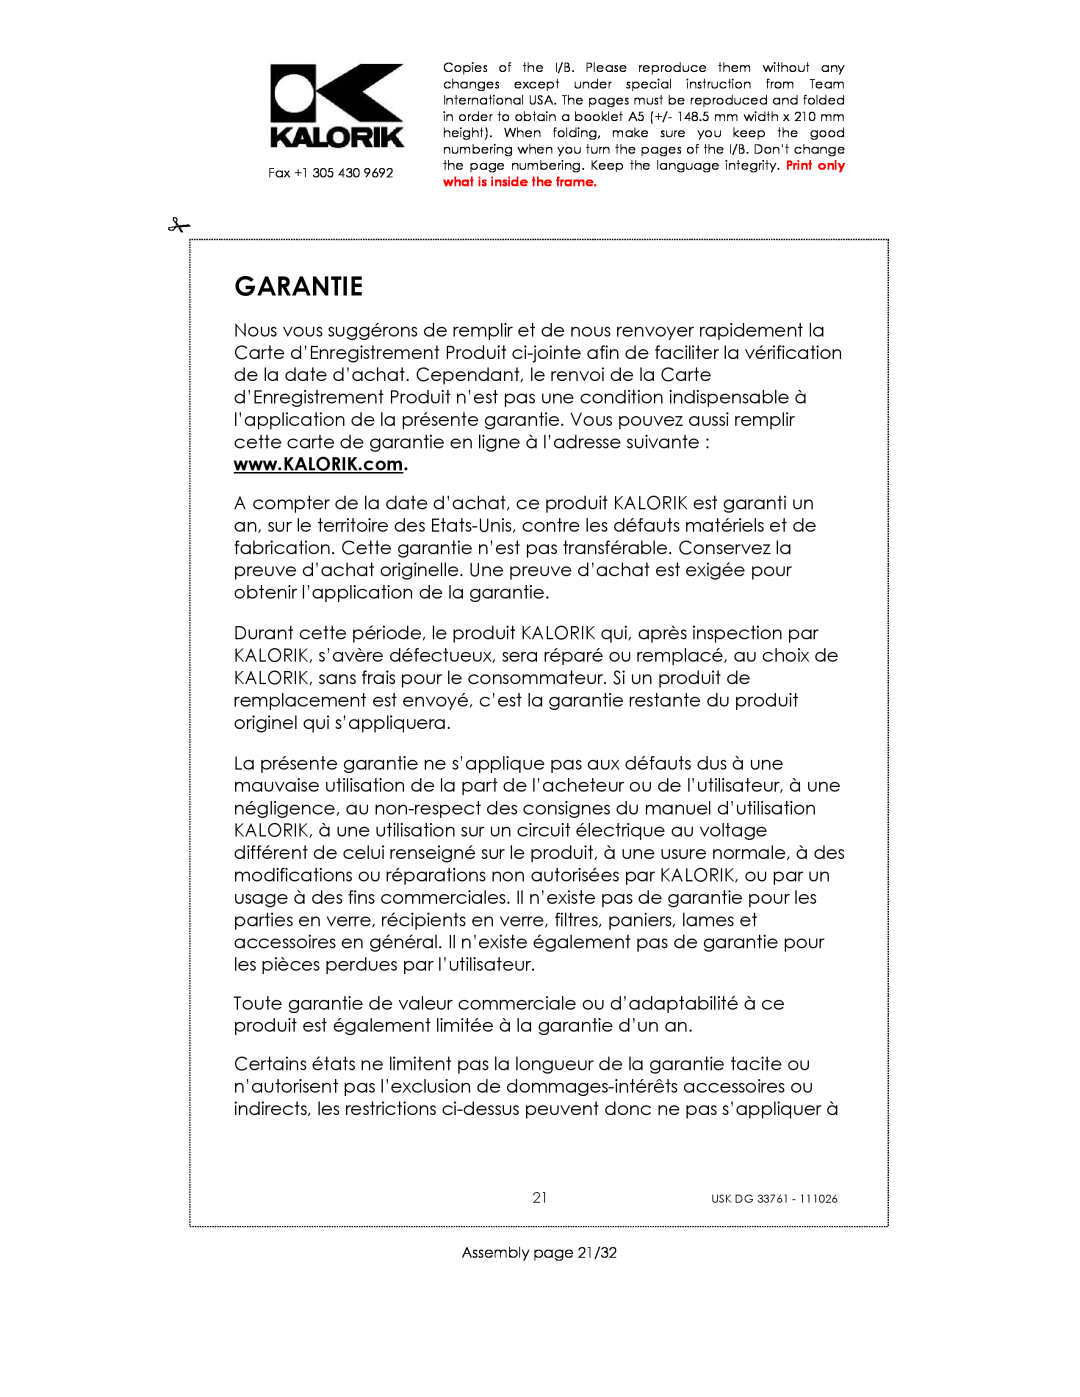 Kalorik USK DG 33761 manual Garantie, Assembly page 21/32 